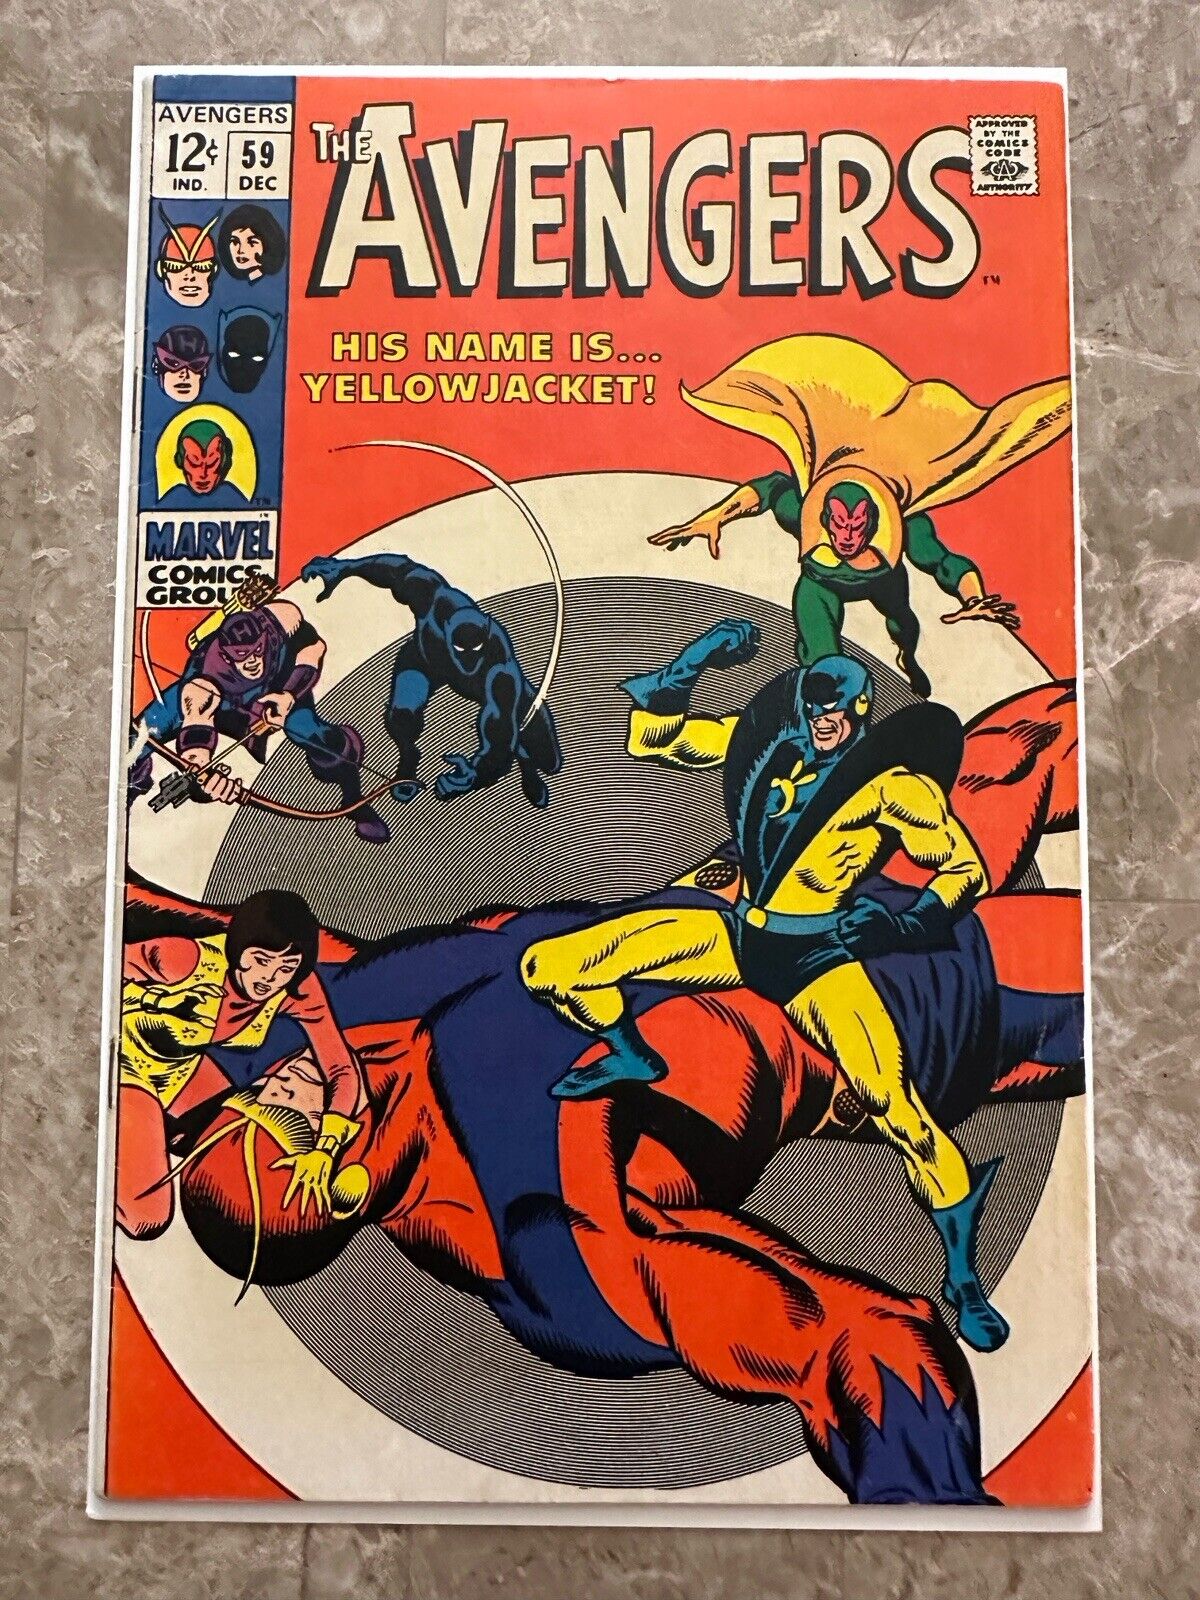 Avengers #59 FN- (Marvel Comics 1968) - Solid copy